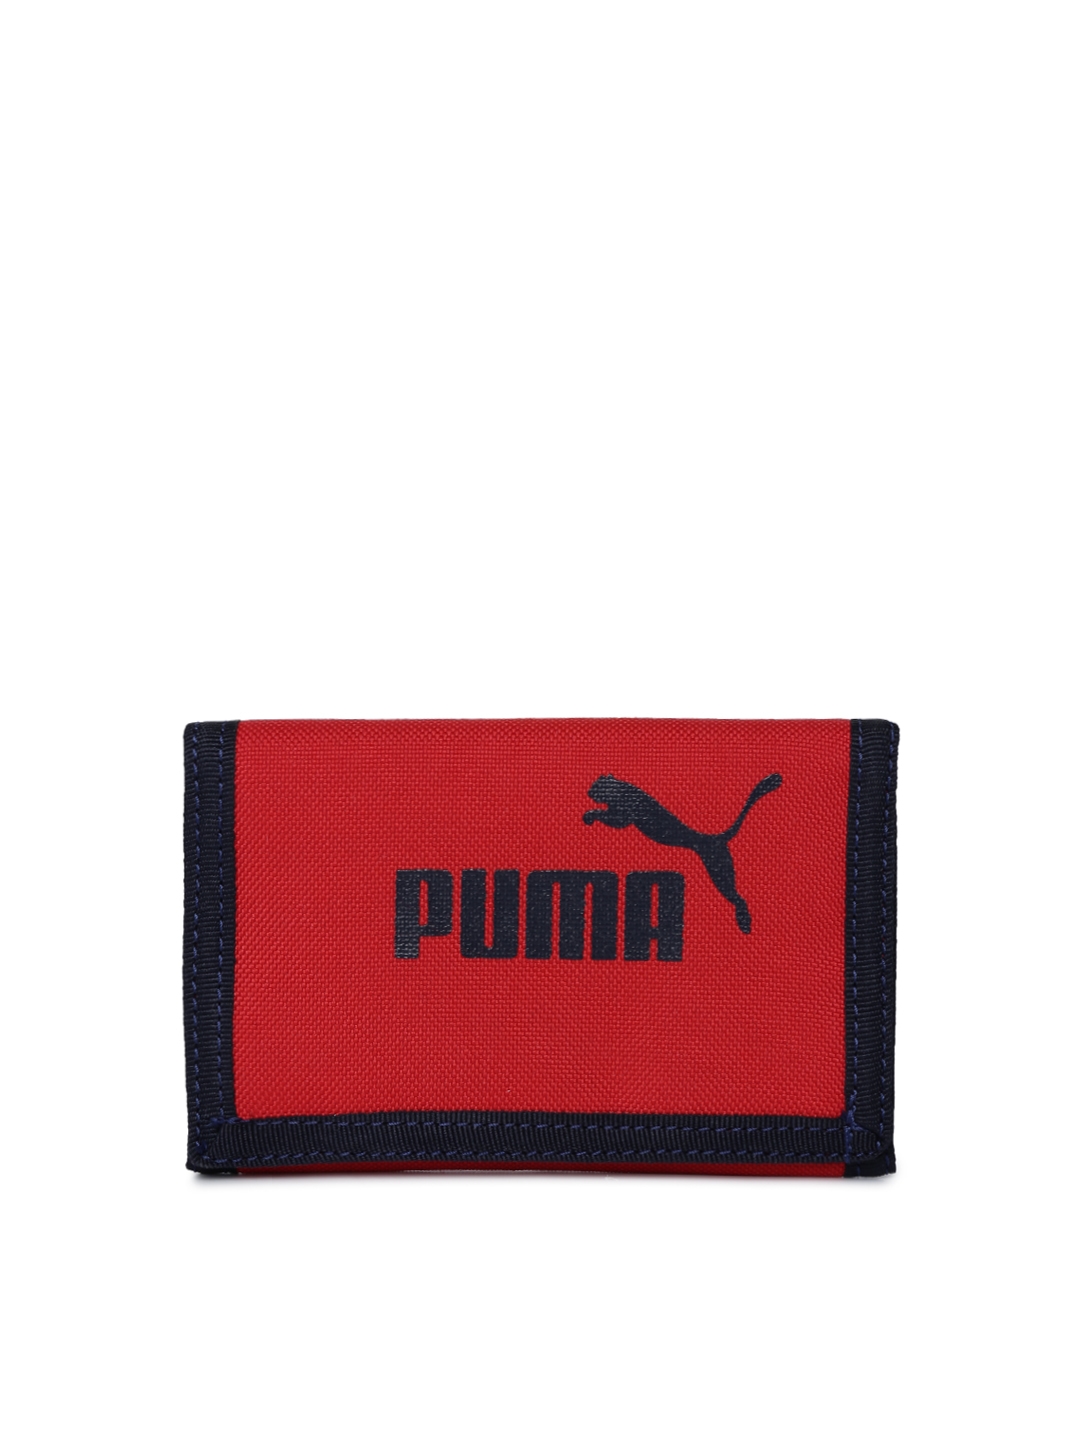 puma 3 fold wallet